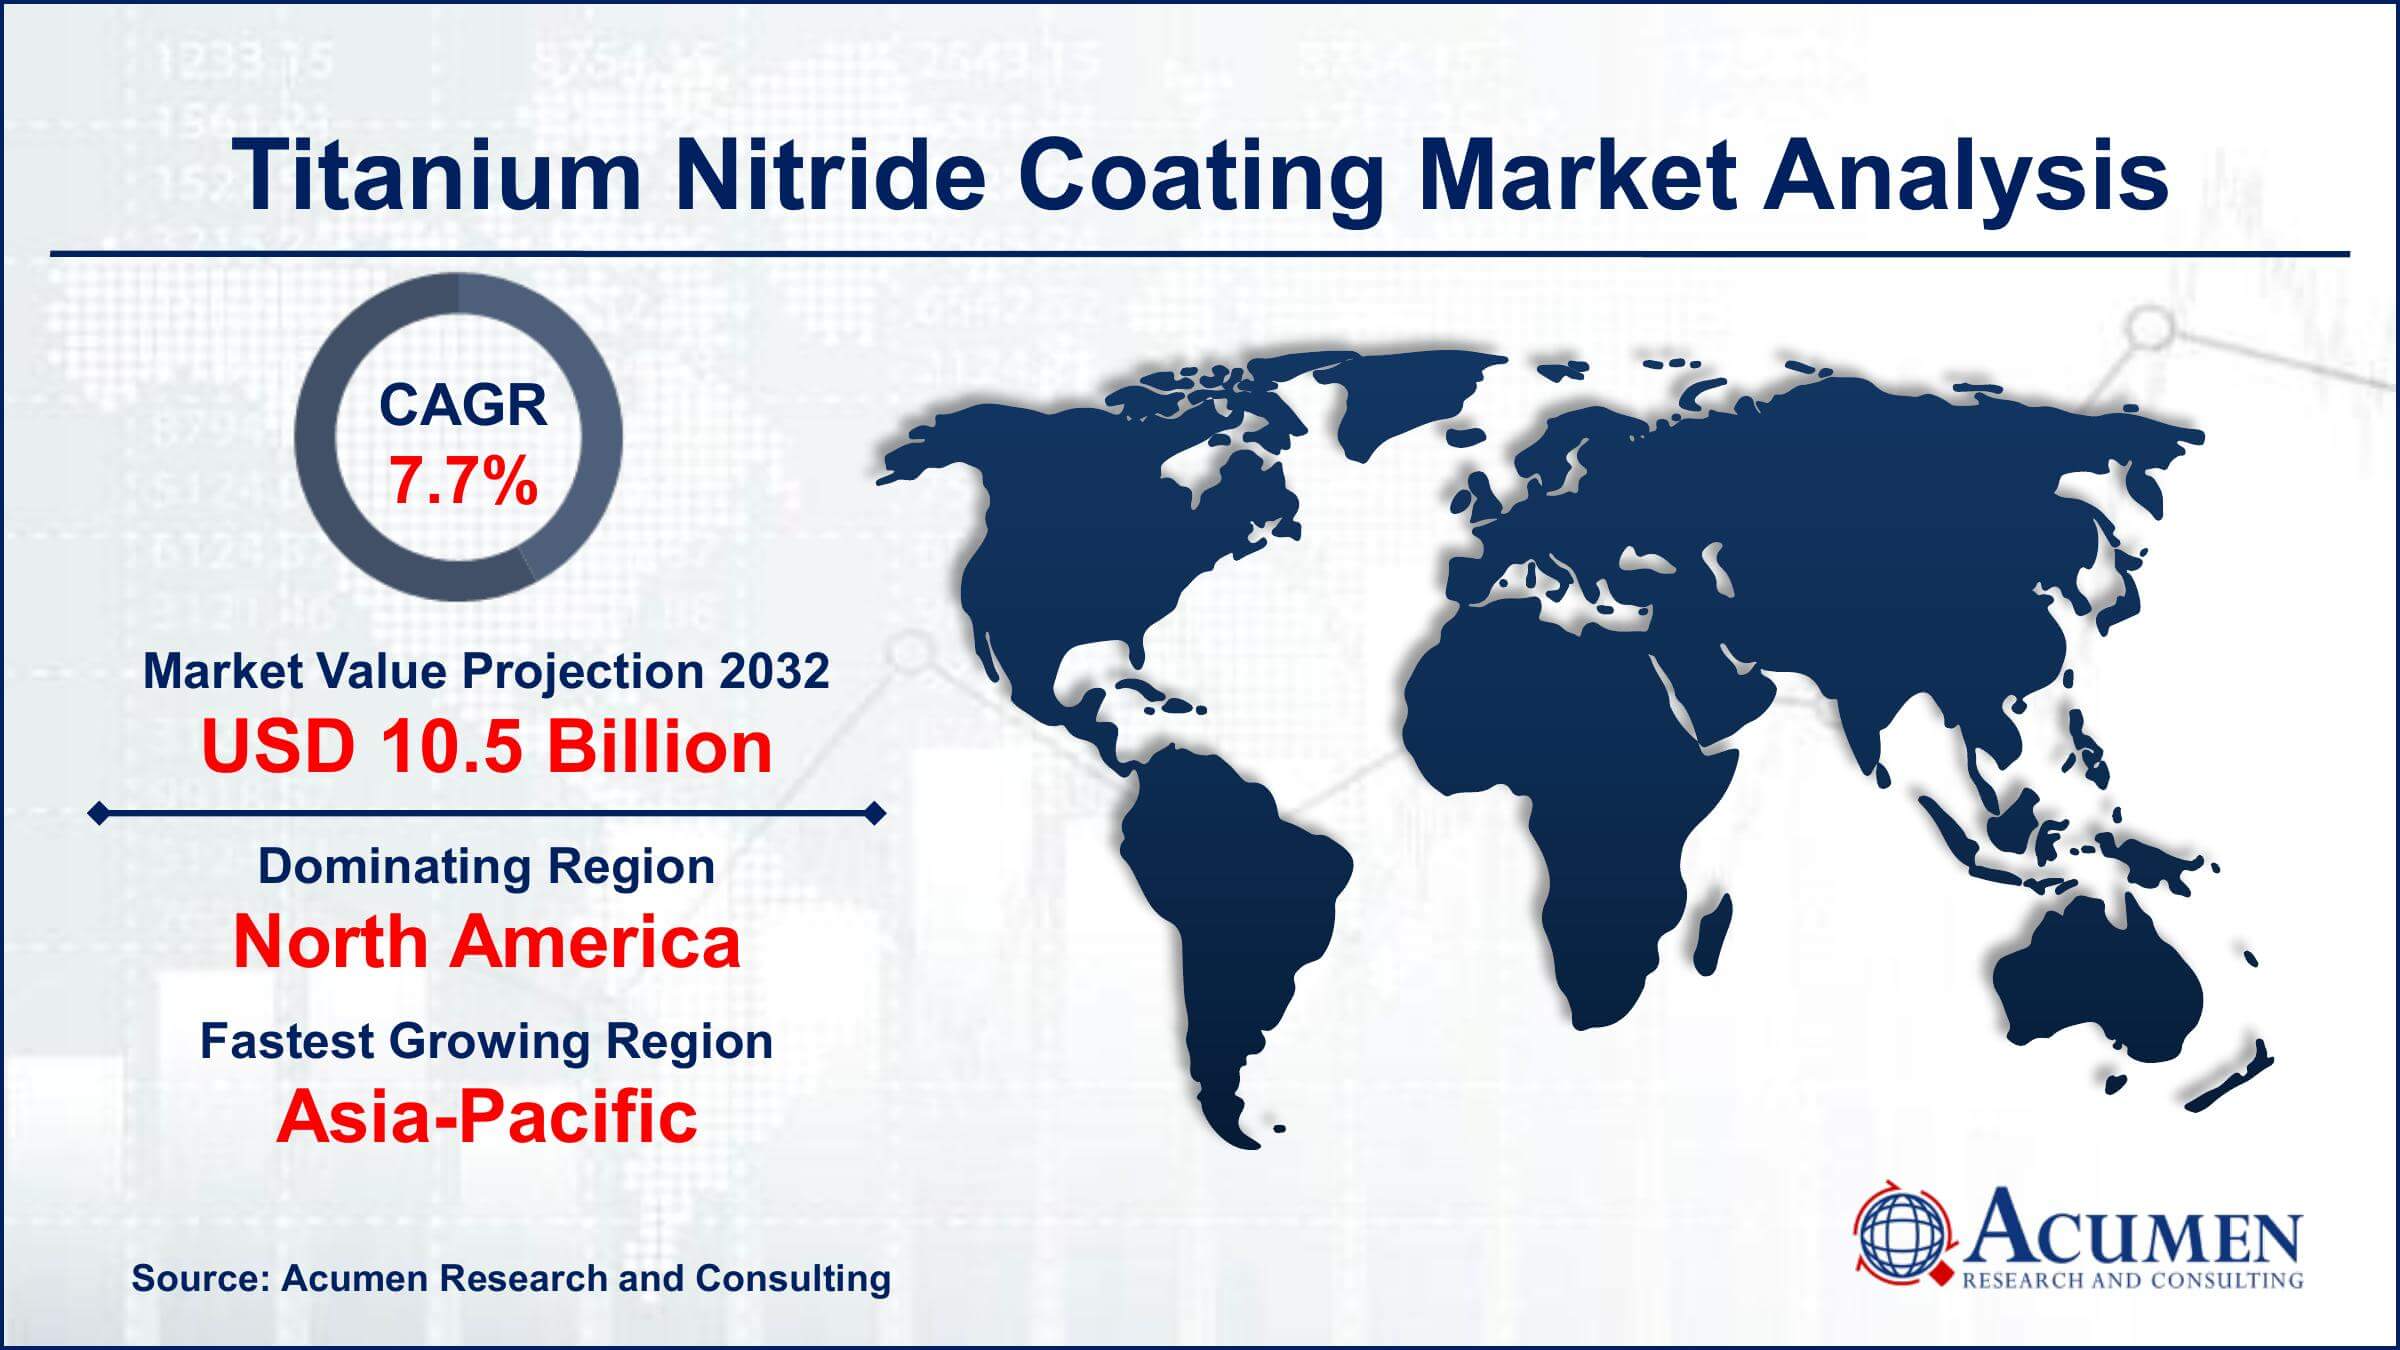 Global Titanium Nitride Coating Market Trends